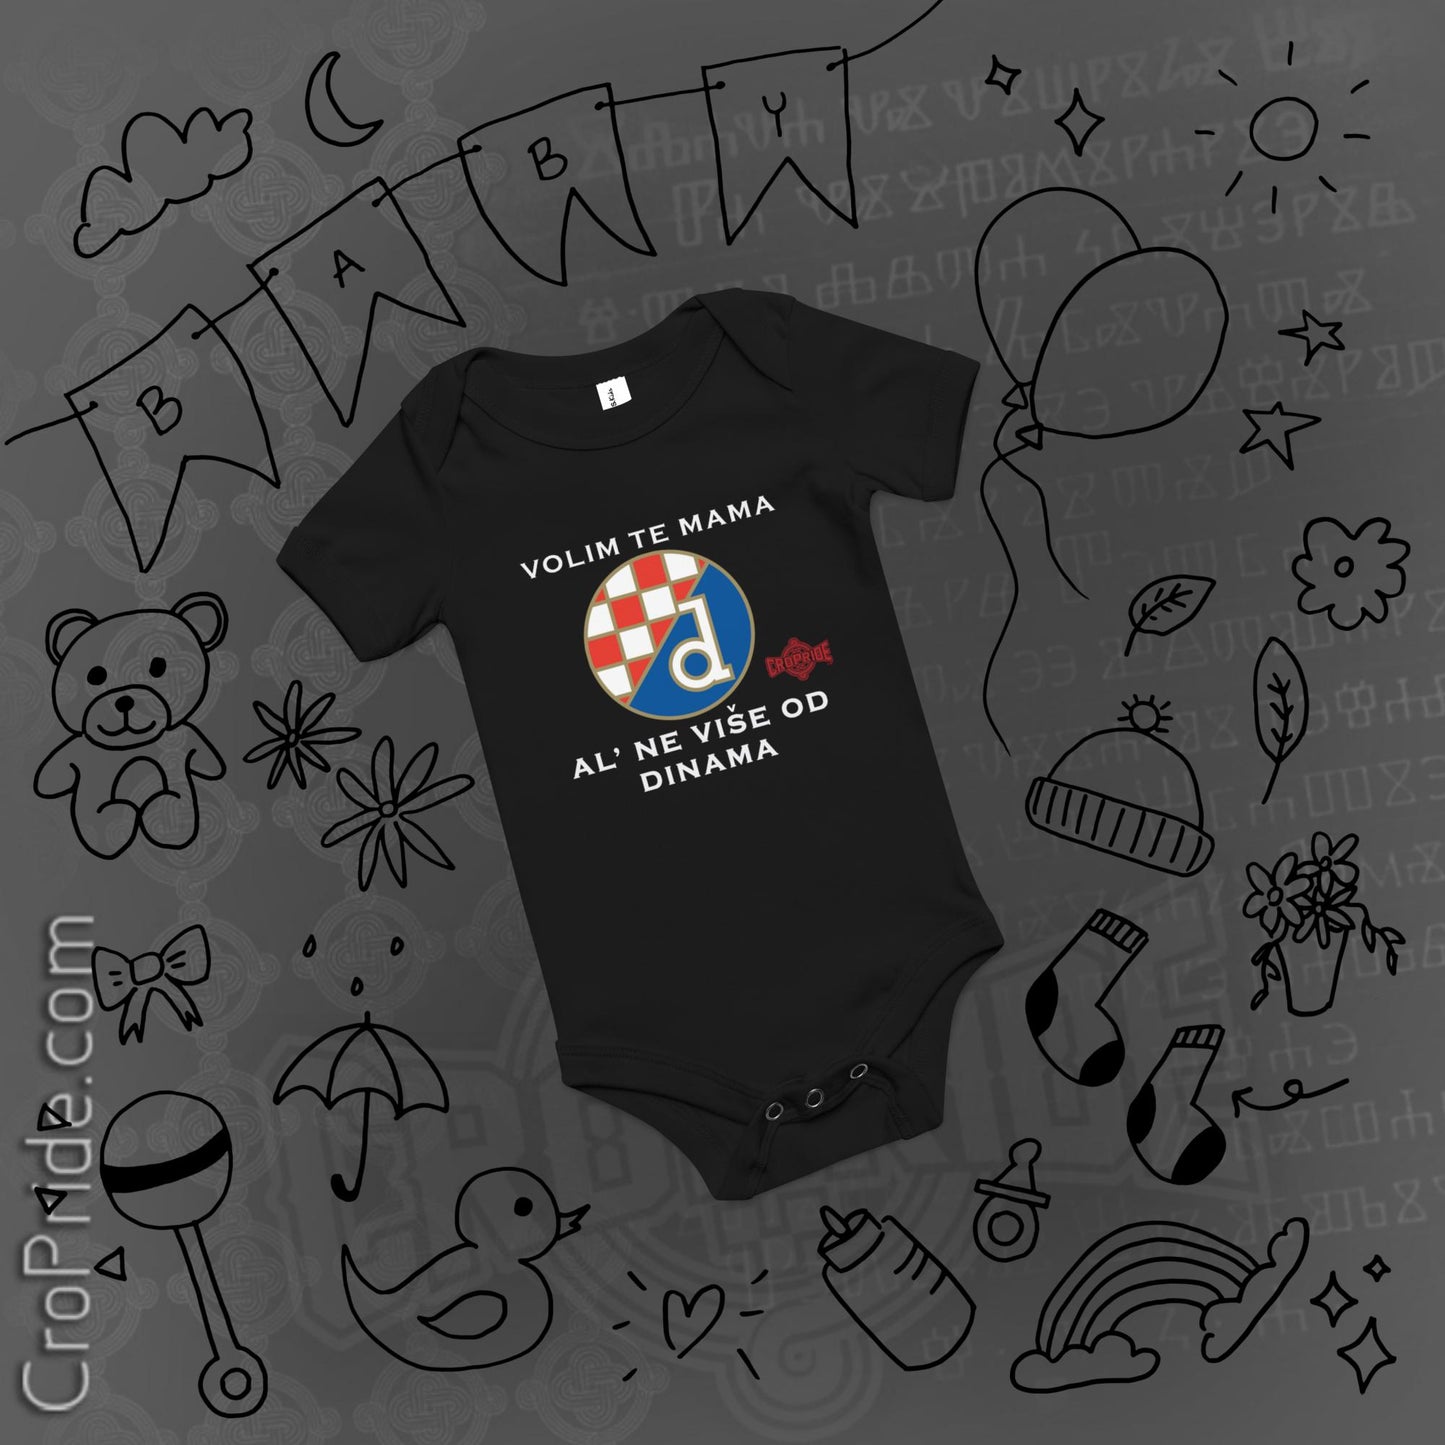 Dinamo Zagreb Baby Shirt - Cute and Comfy